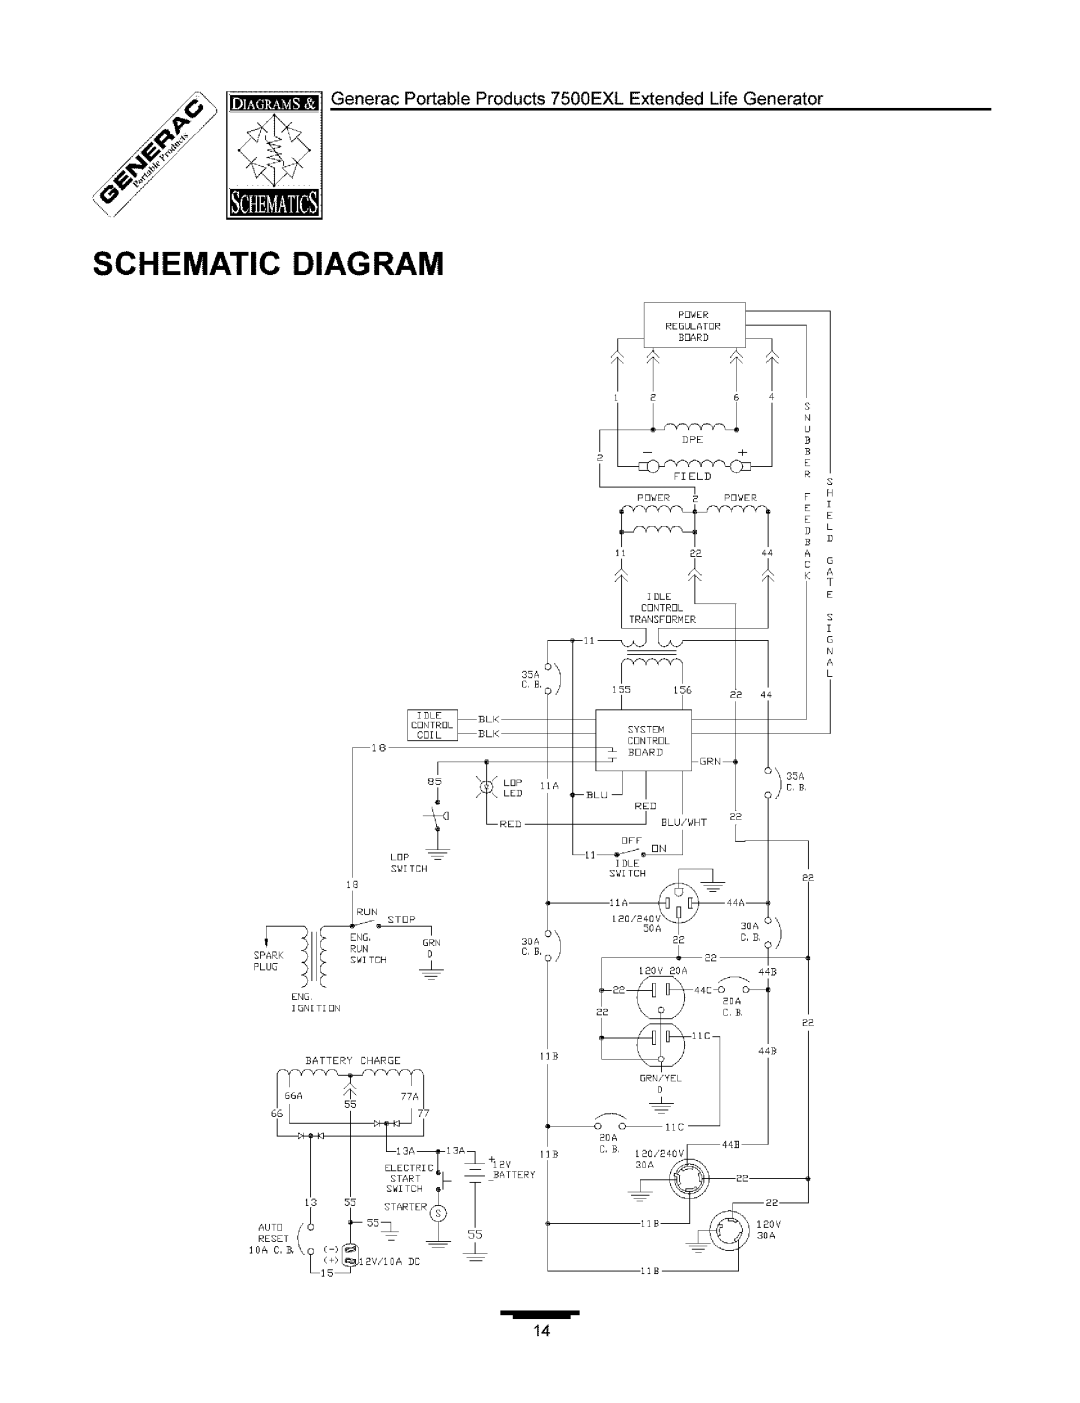 Generac 7500 owner manual Schematic Diagram, Systeh Control, Board, I BLU/ HT 2 IDLE, 155156 2@ 